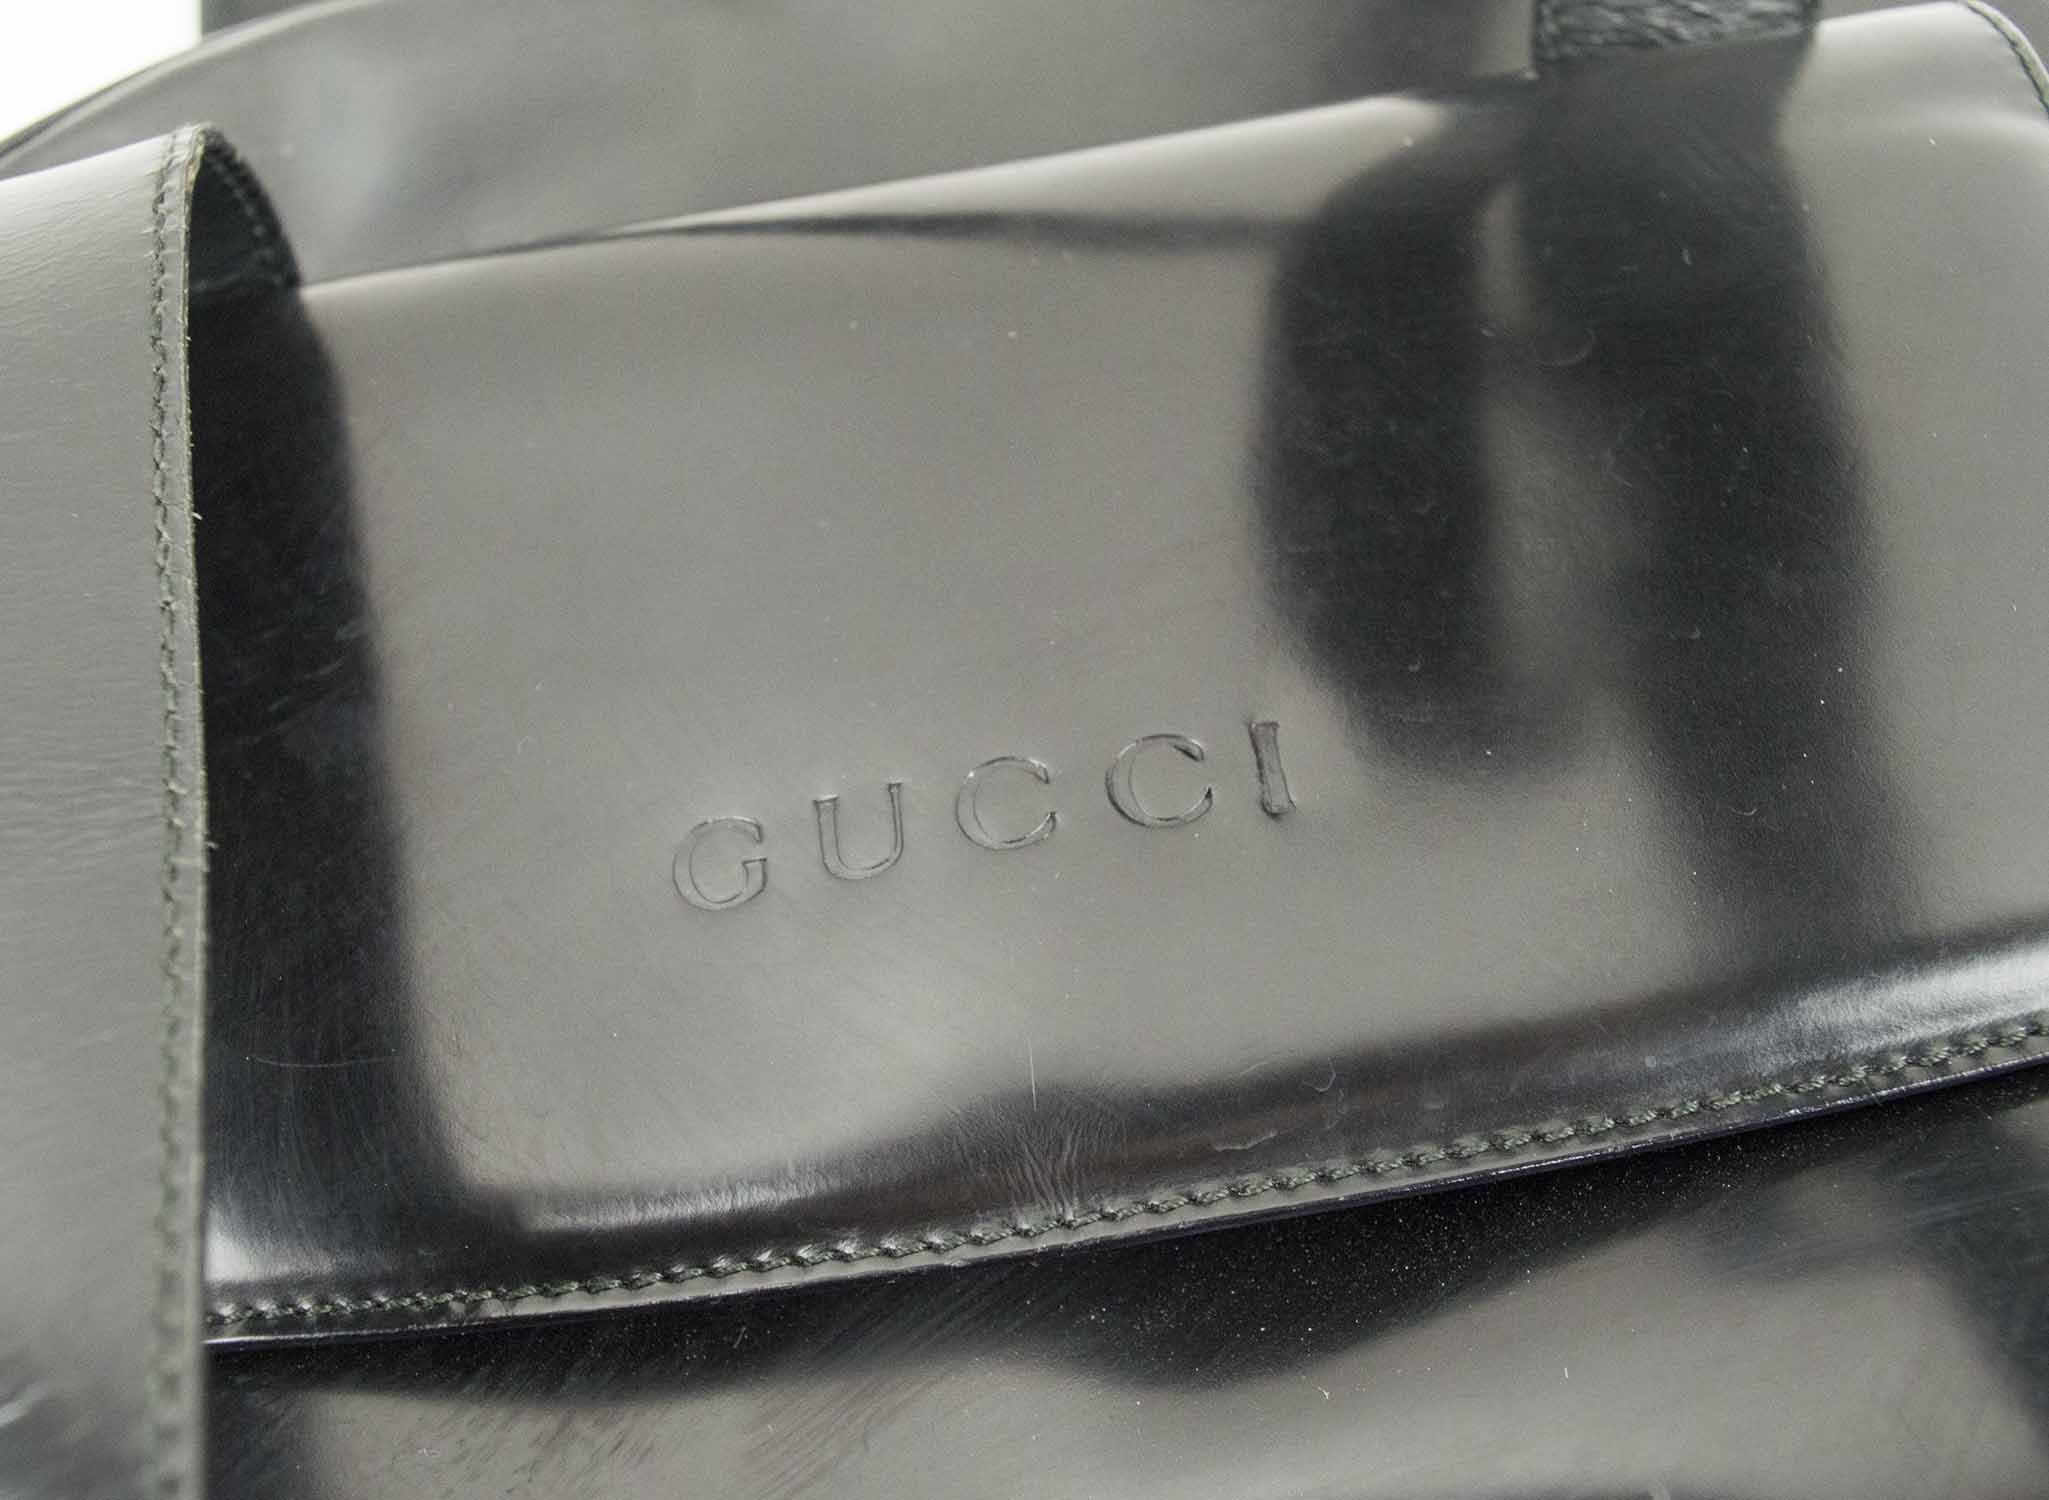 vintage gucci black leather handbag